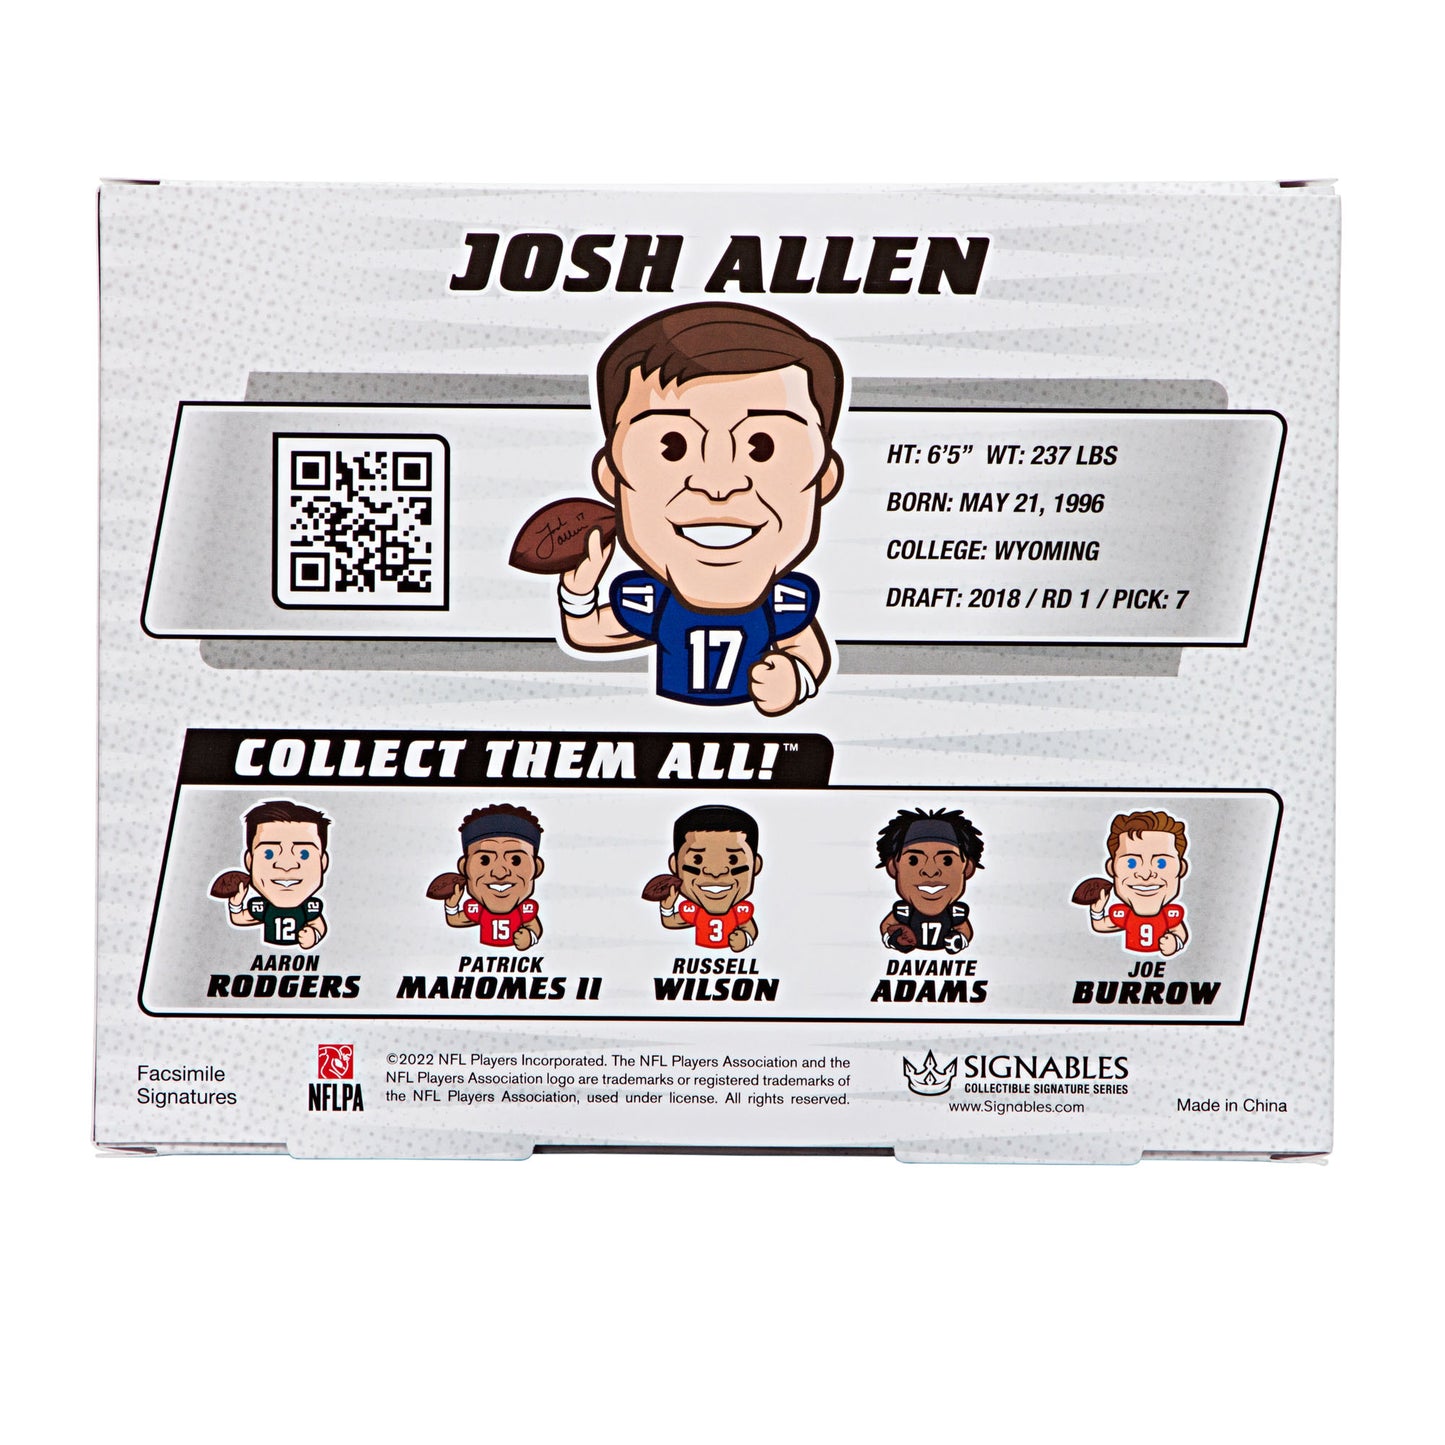 Josh Allen - NFLPA Signables Collectible